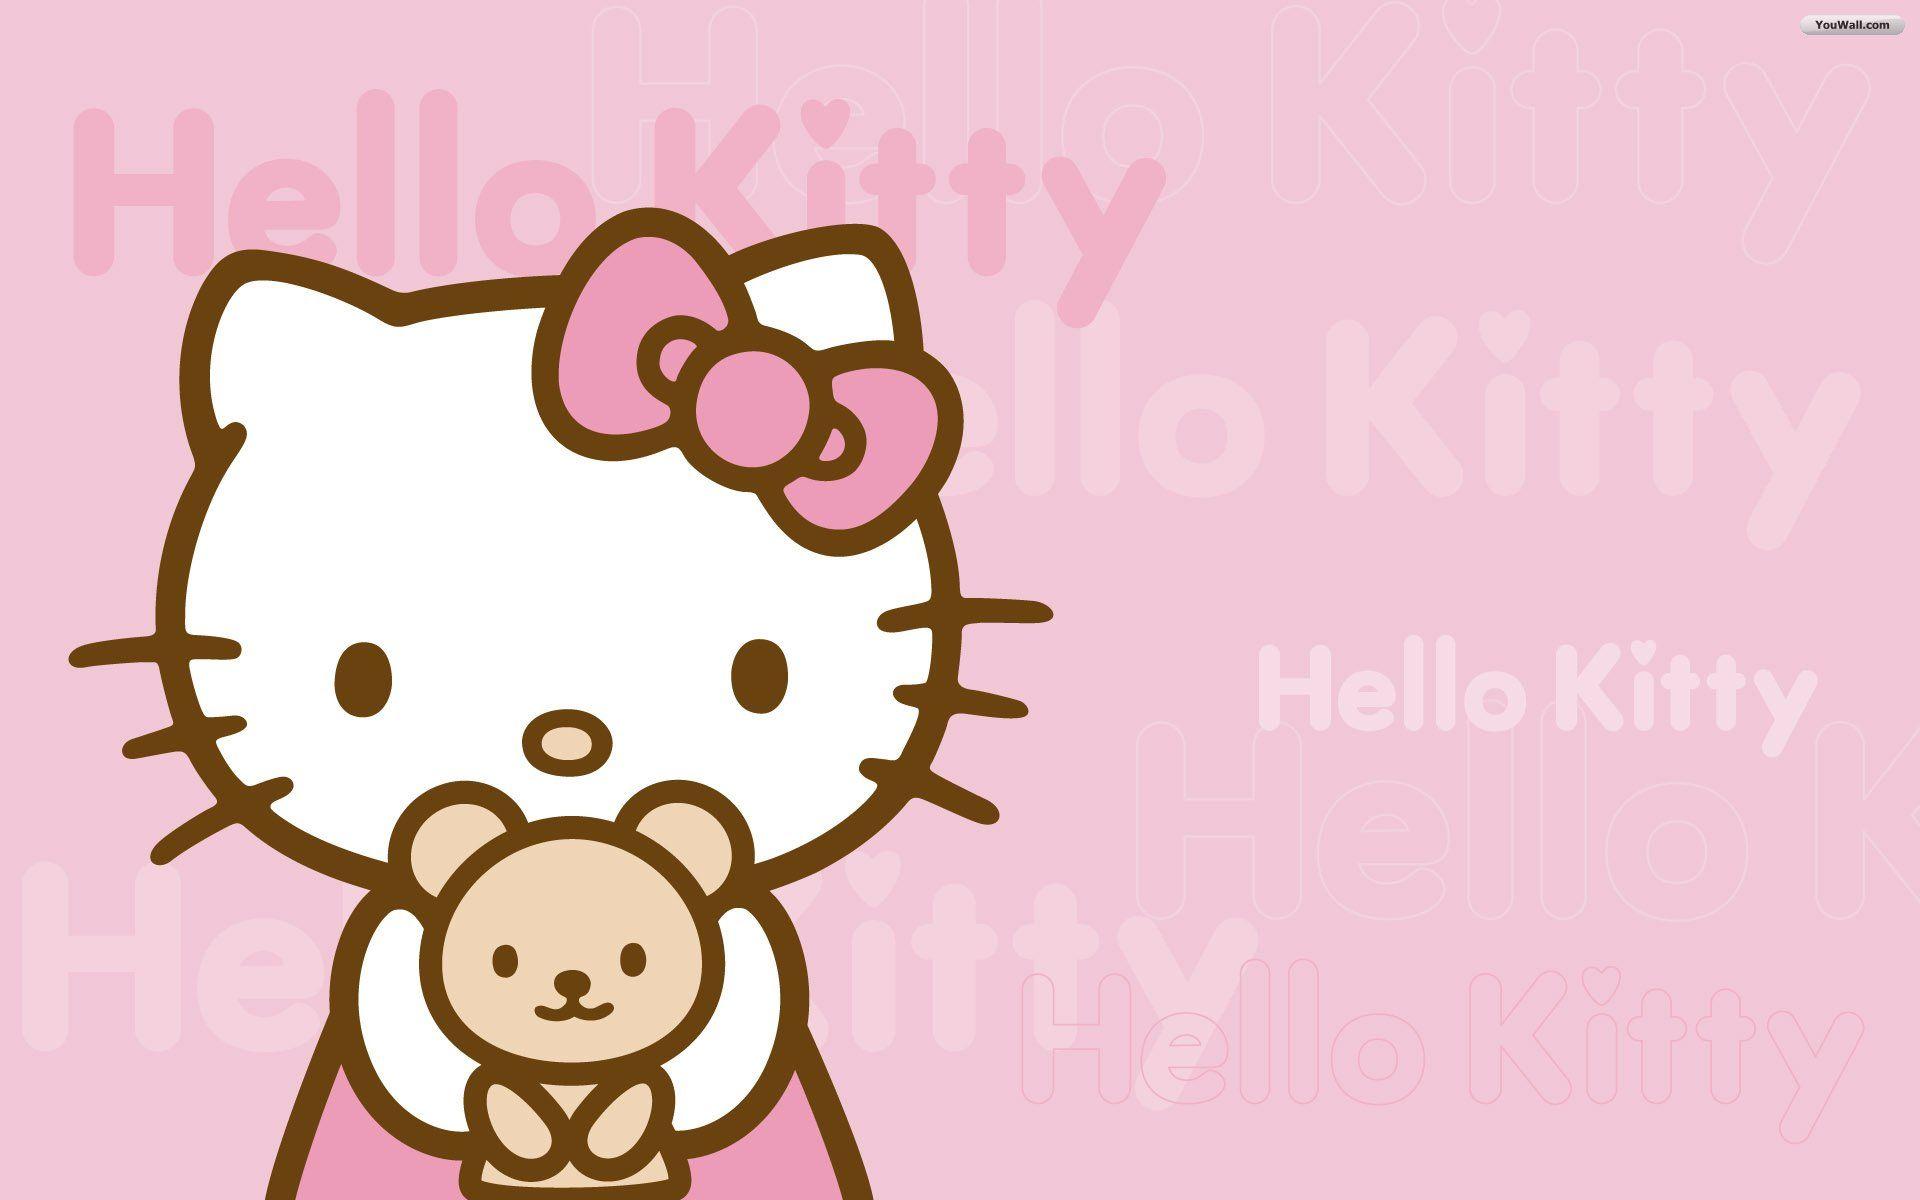 Wallpaper For > Wallpaper Hello Kitty Pink